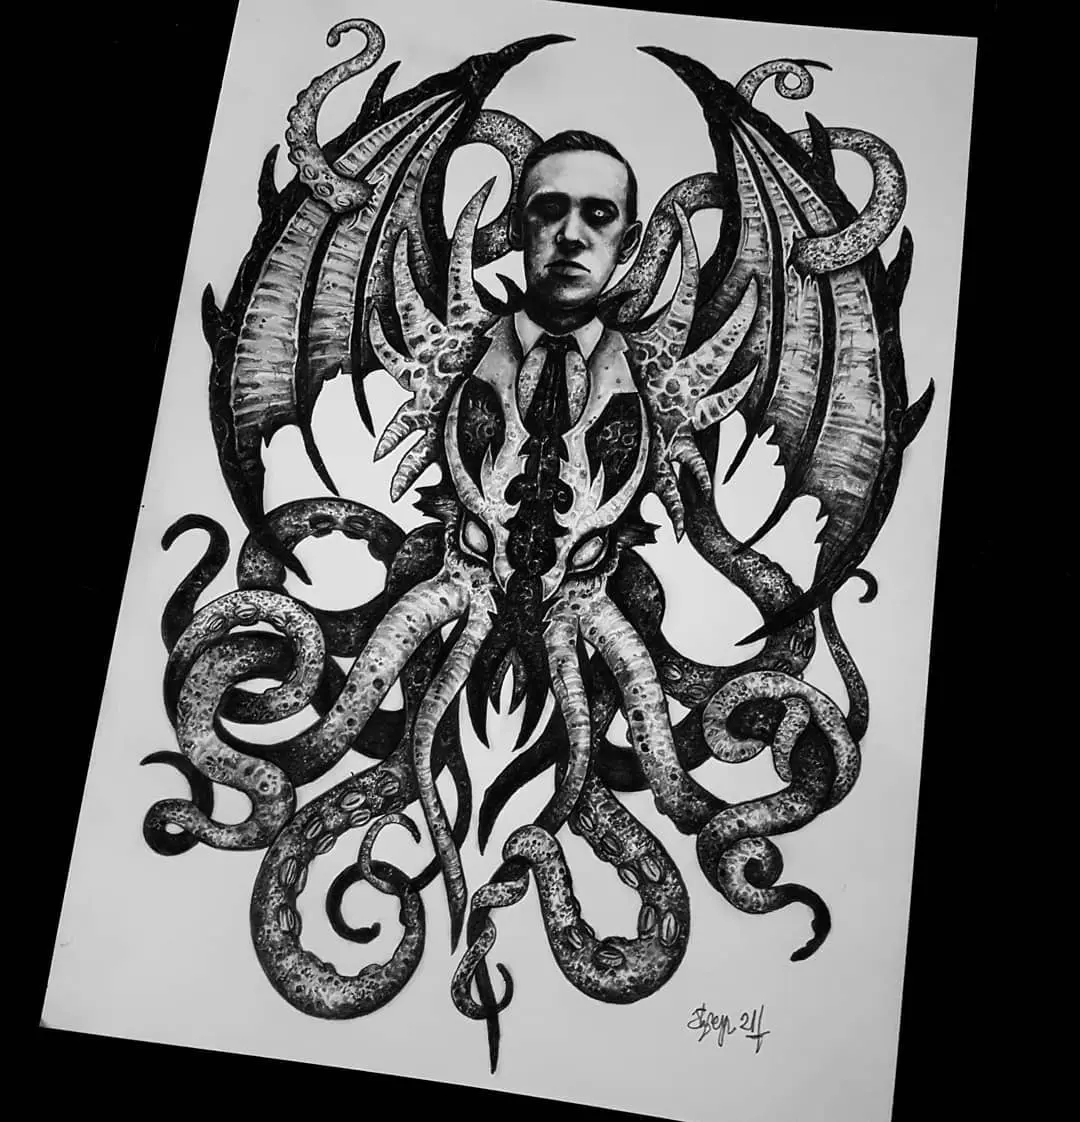 Lovecraft portrait 💀💀 after a few weeks of lockdown brain/art block, it feels amazing to draw again 🖤💪
.
.
.
.
.
.
.
.
.
.
                         artesobscurae occultarcana thedarkestwork onlythedarkest black_tattoo_culture darkartists wiccac